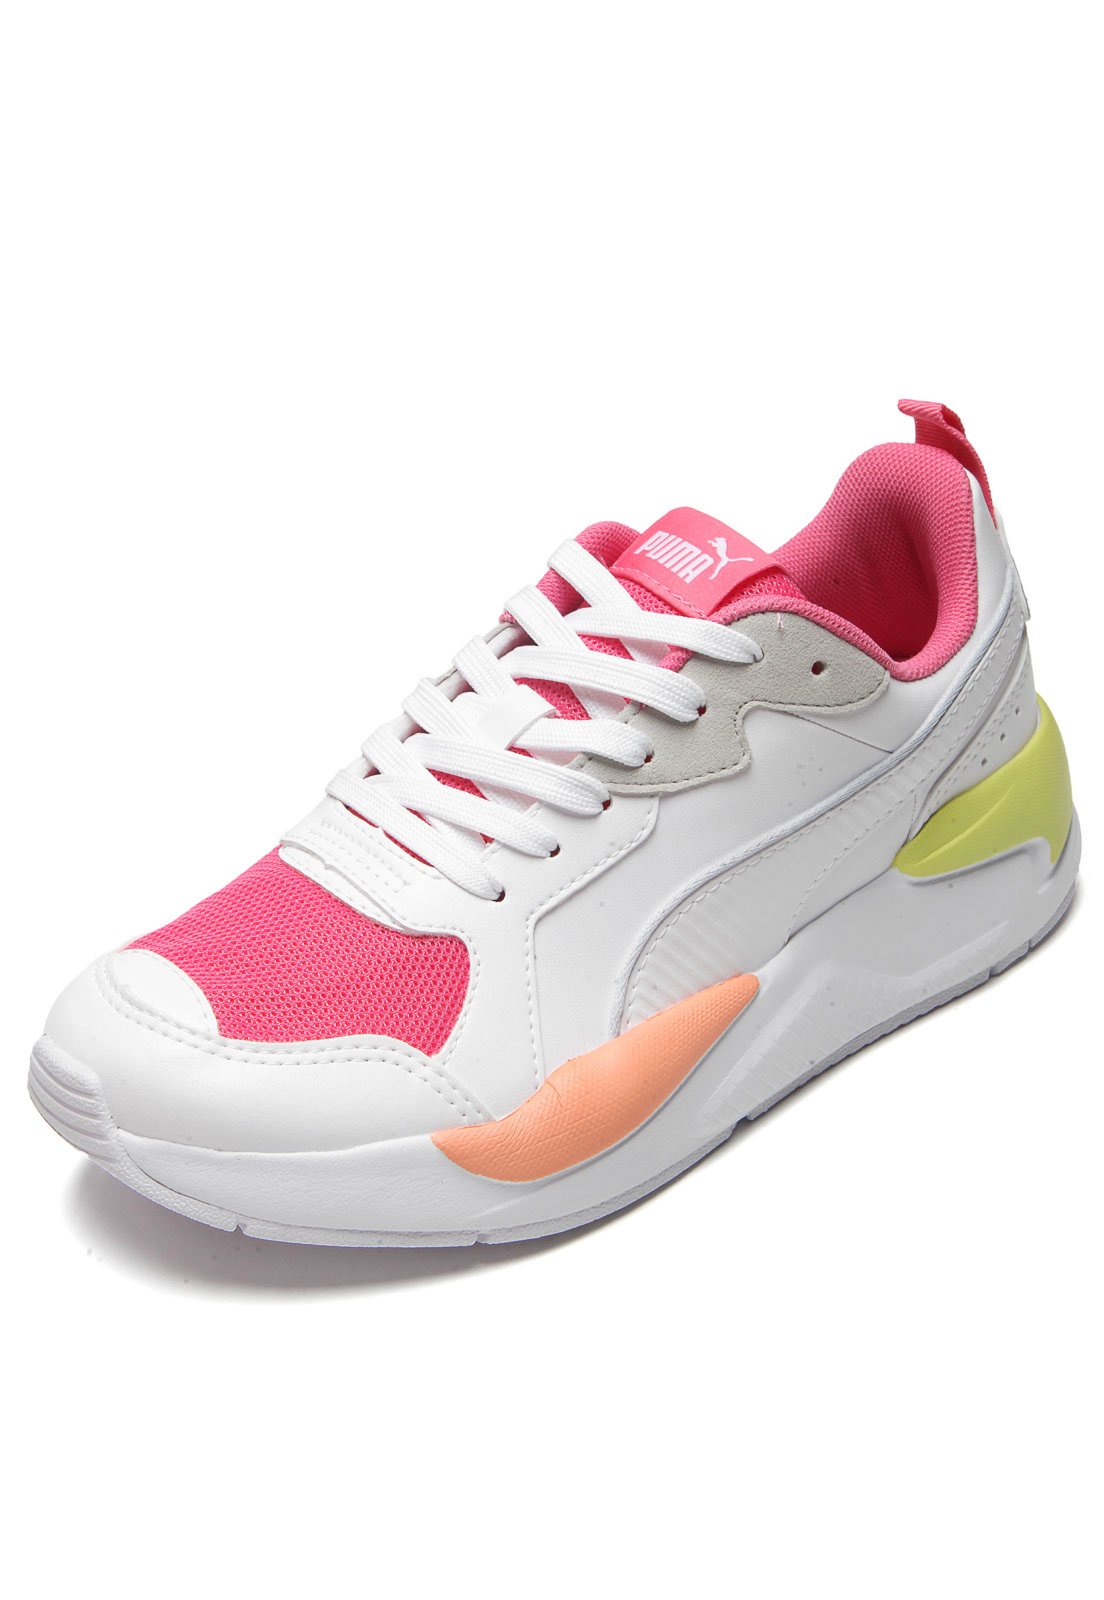 tenis puma branco e rosa